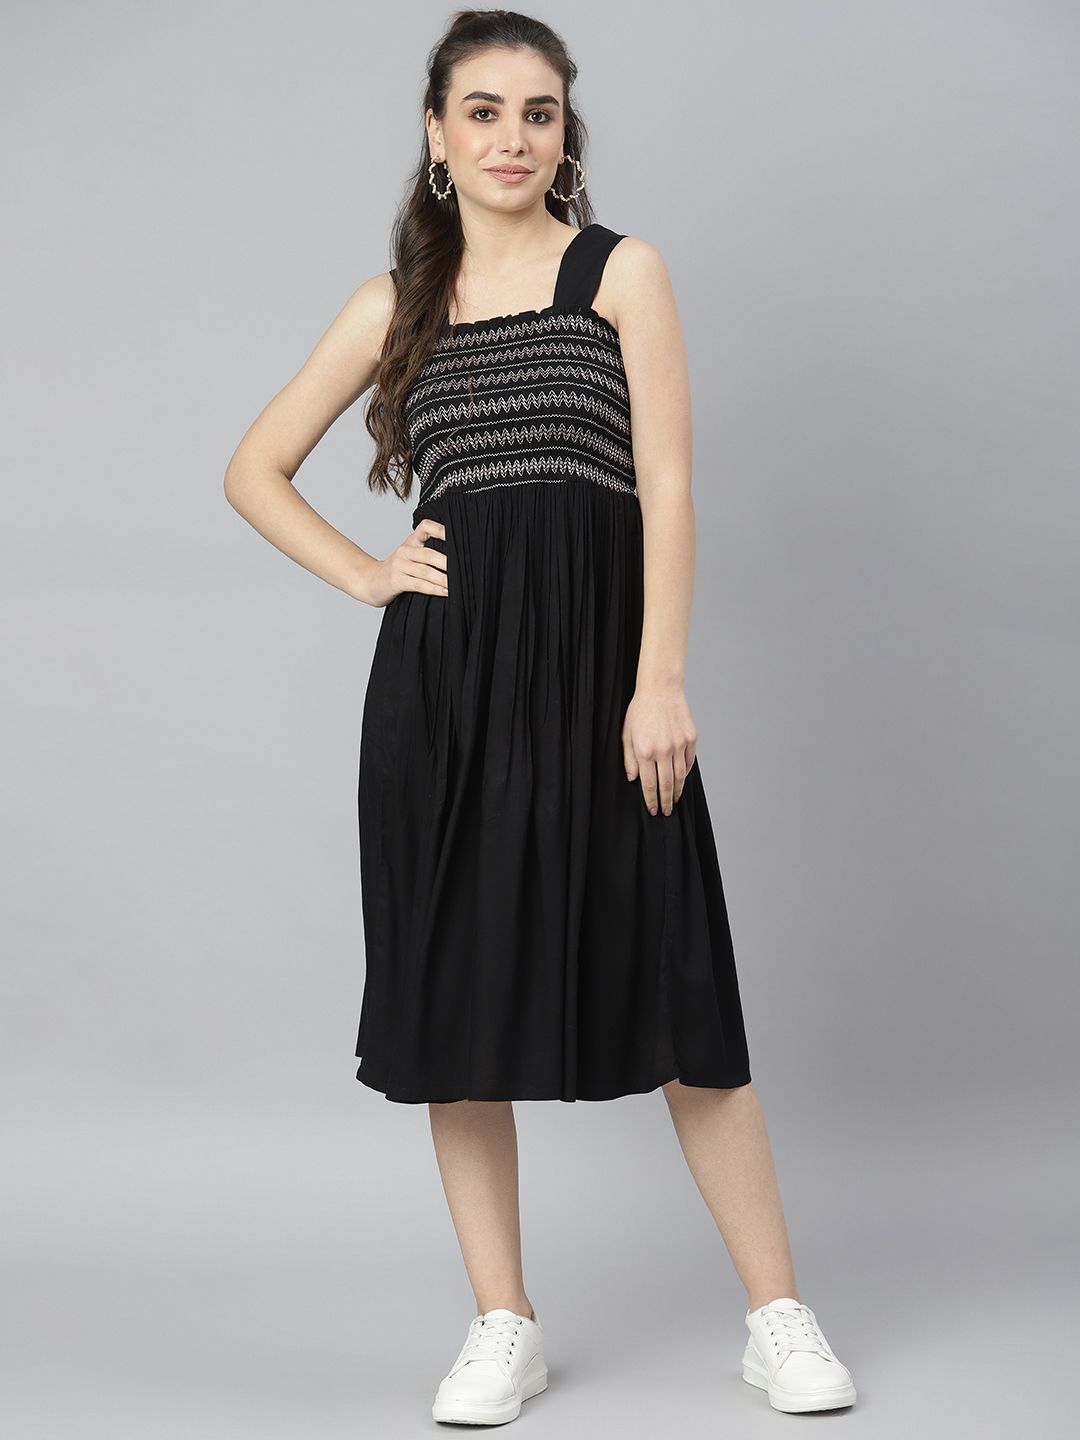 DEEBACO Black Striped Midi Dress Price in India